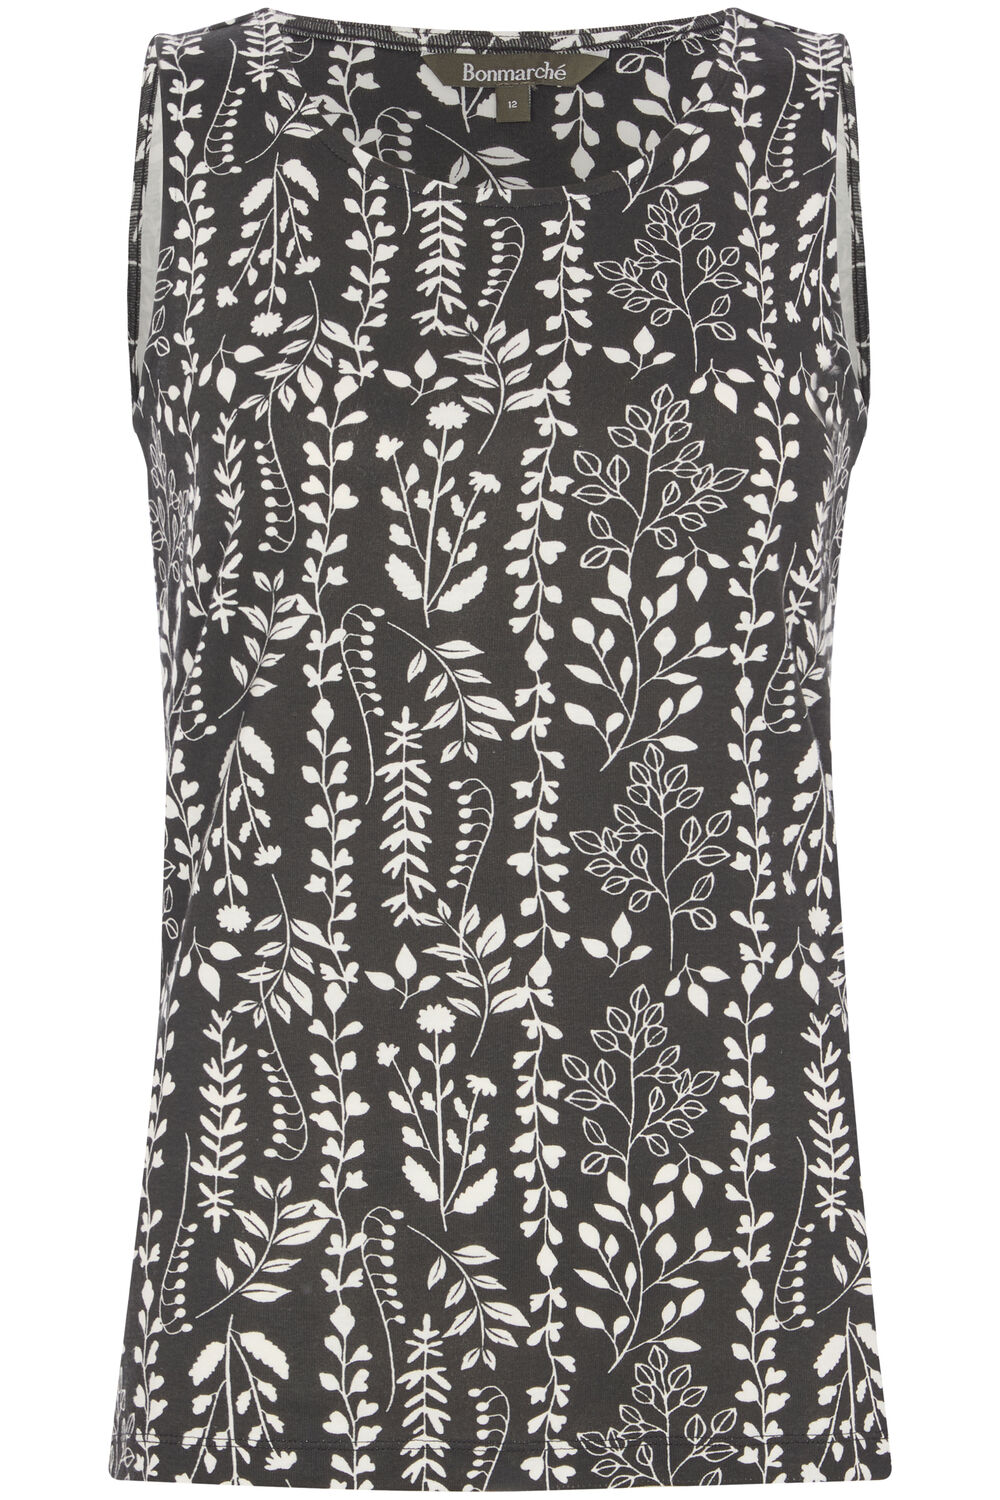 Bonmarche Black Sleeveless Floral Stem Print Scoop Neck Vest, Size: 14